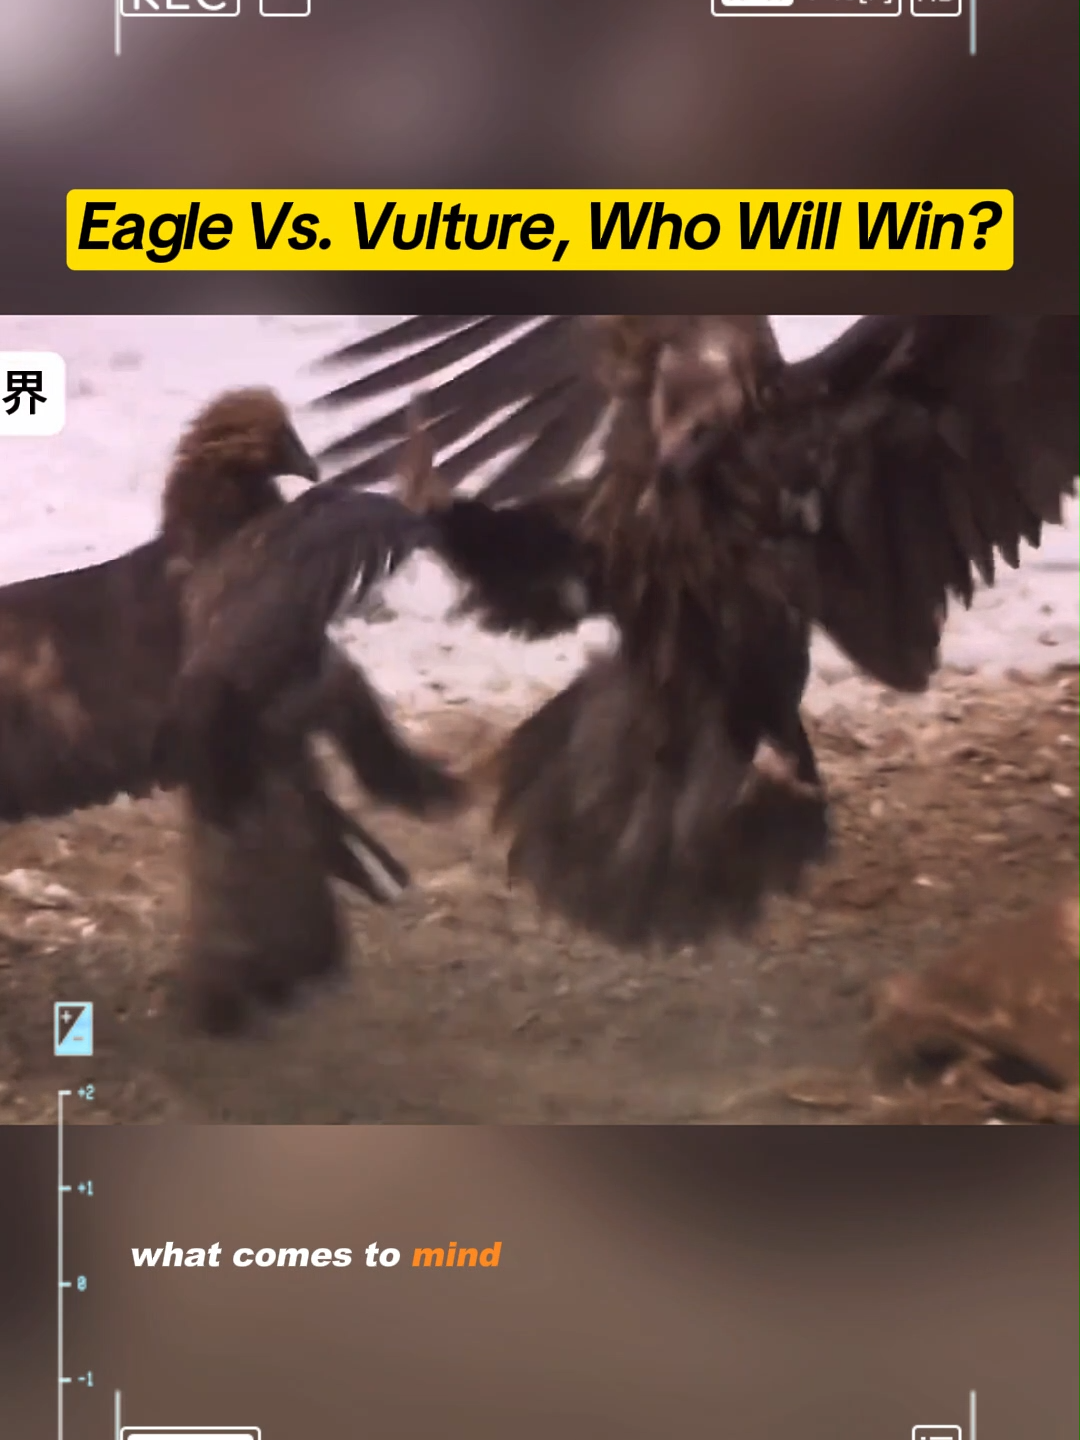 Eagle vs. vulture, who will win? #wildanimal #fyp #animals